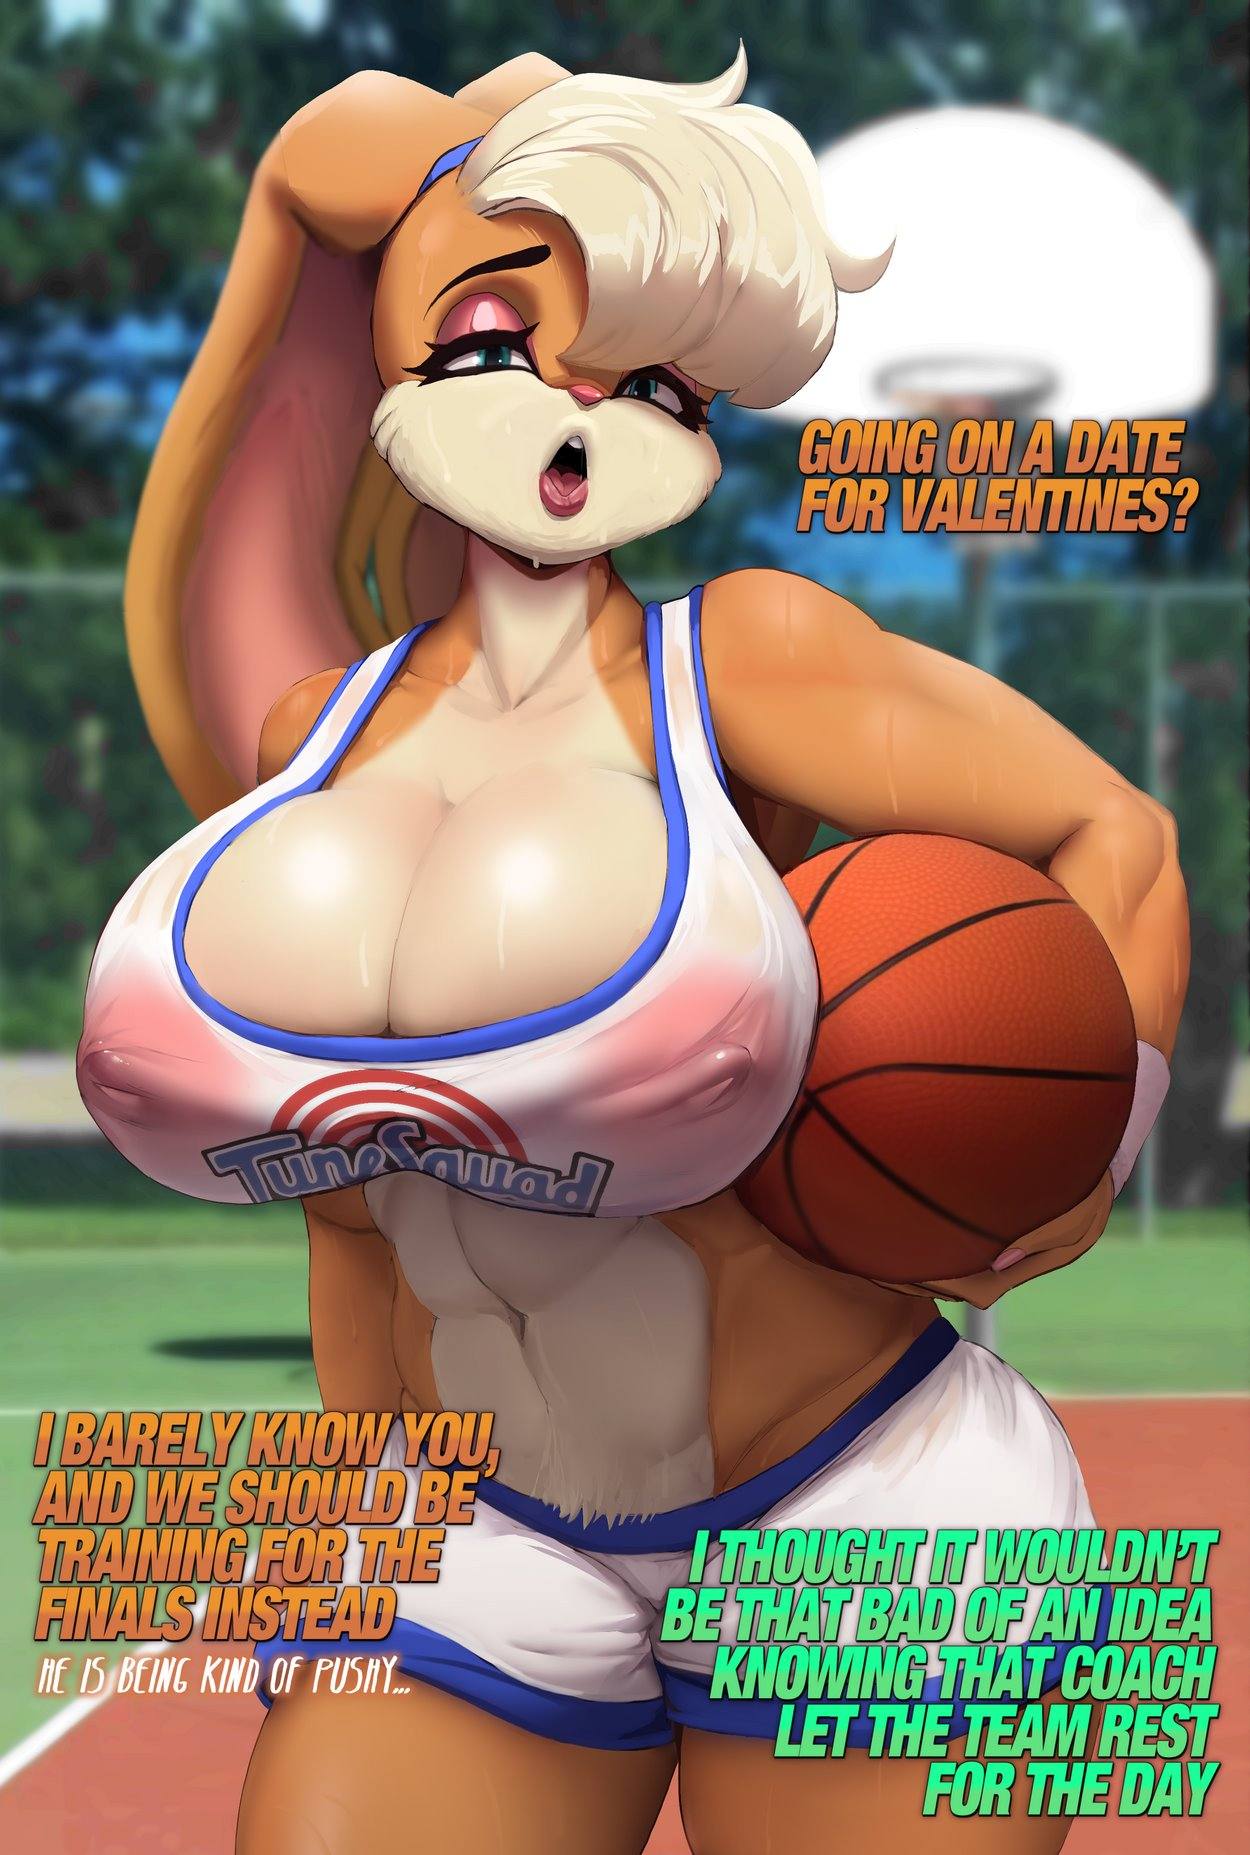 Lola Bunny Furry Porn - Lola Bunny's Valentine's Day (Space Jam) Picturd - Comics Army